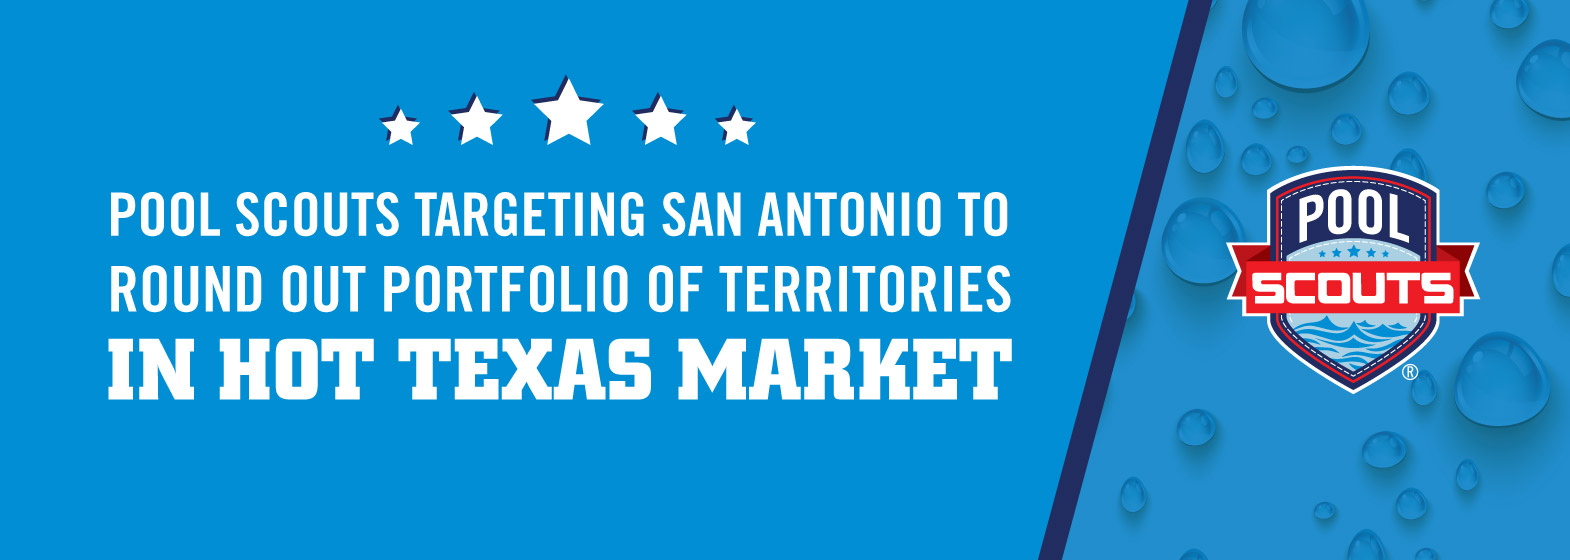 Image of Pool Scouts Targeting San Antonio to Round Out Portfolio of Territories in Hot Texas Market